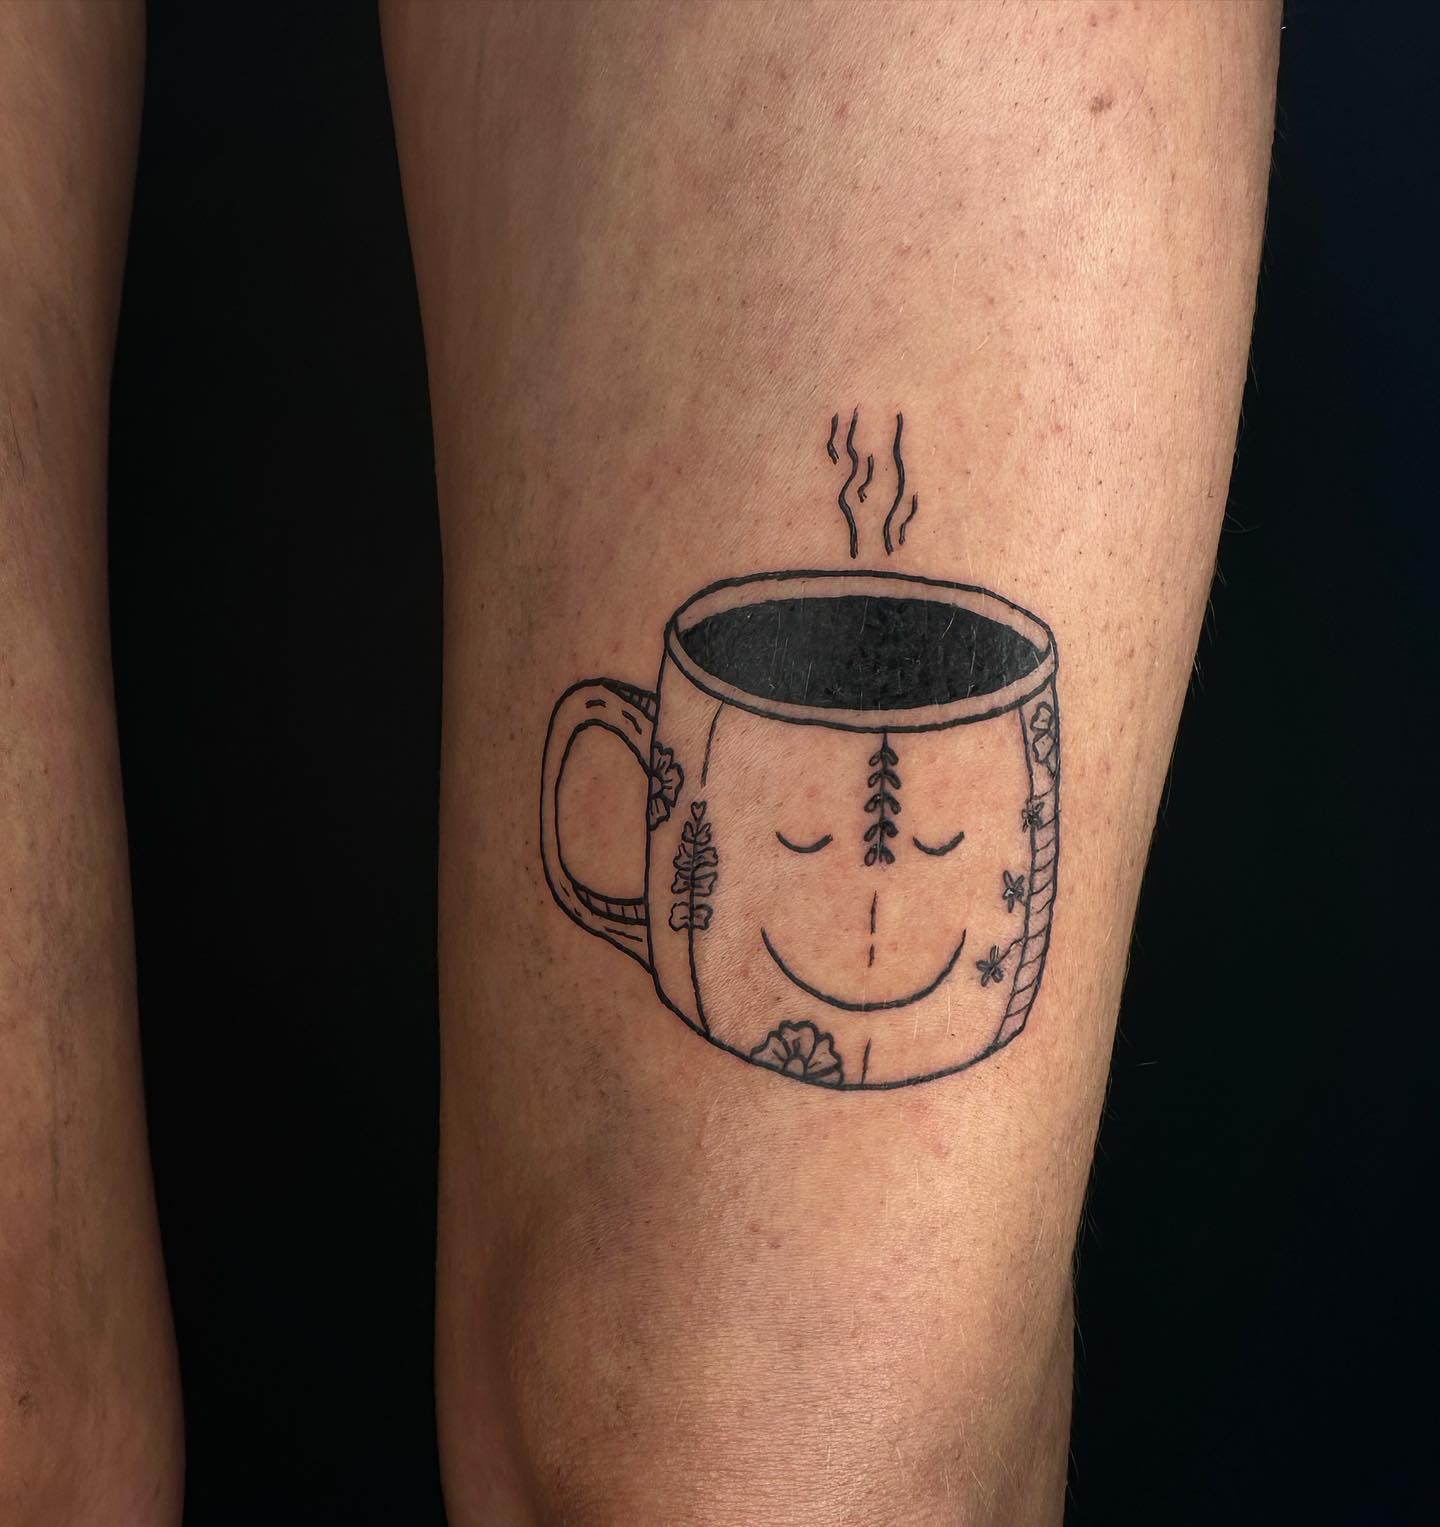 _coffee_ .
.
.
#tattoo #tattoos #coffee #coffeetime #illustration #imatattooarti